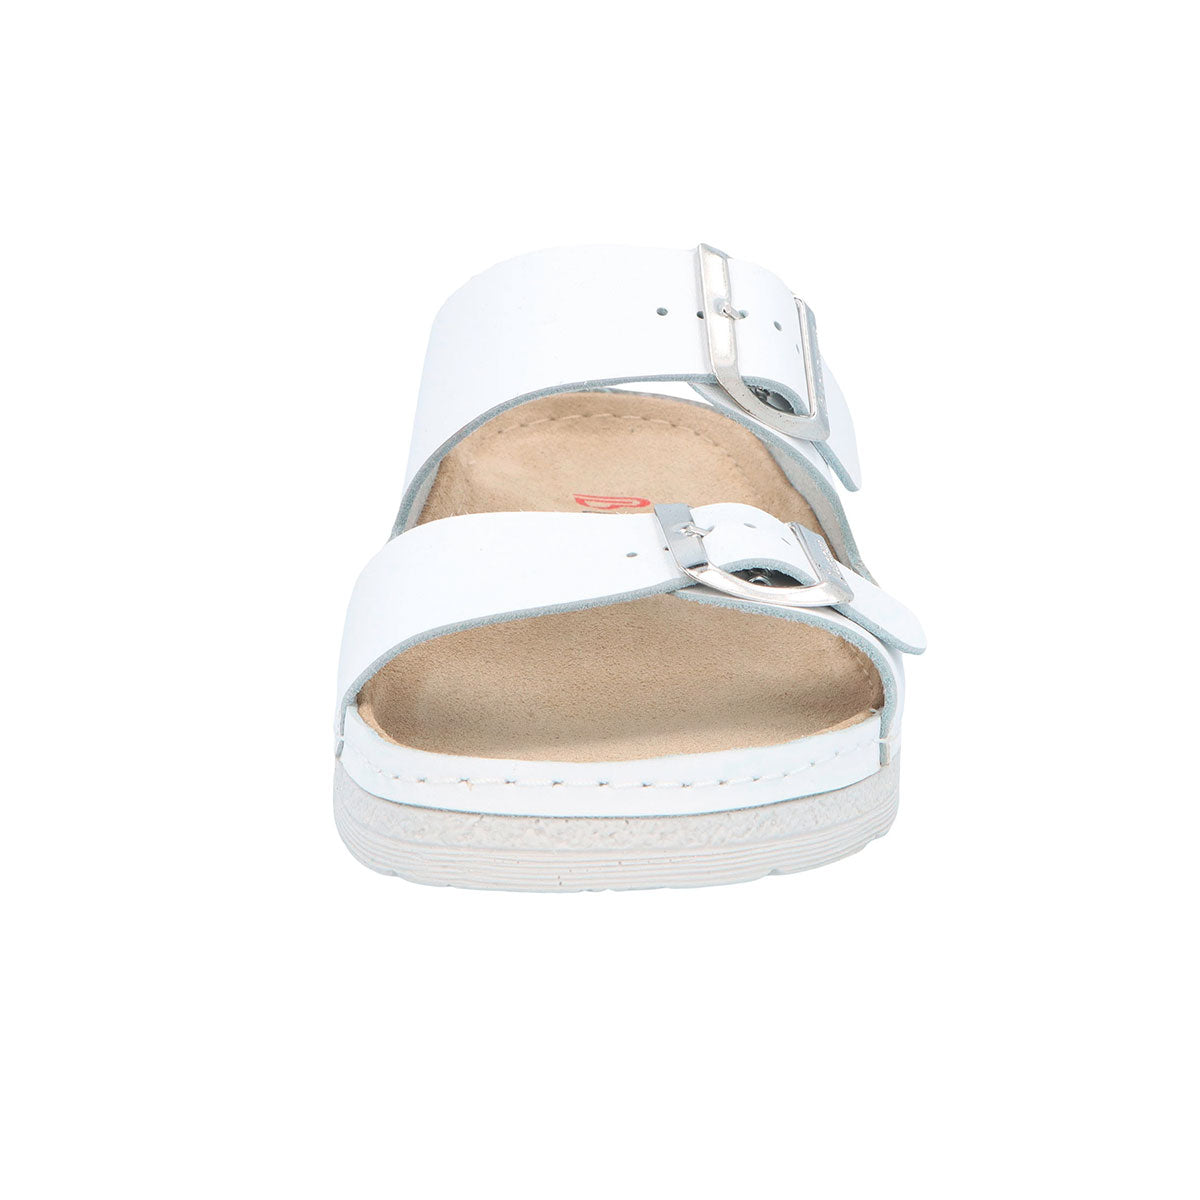 Verica sandals white